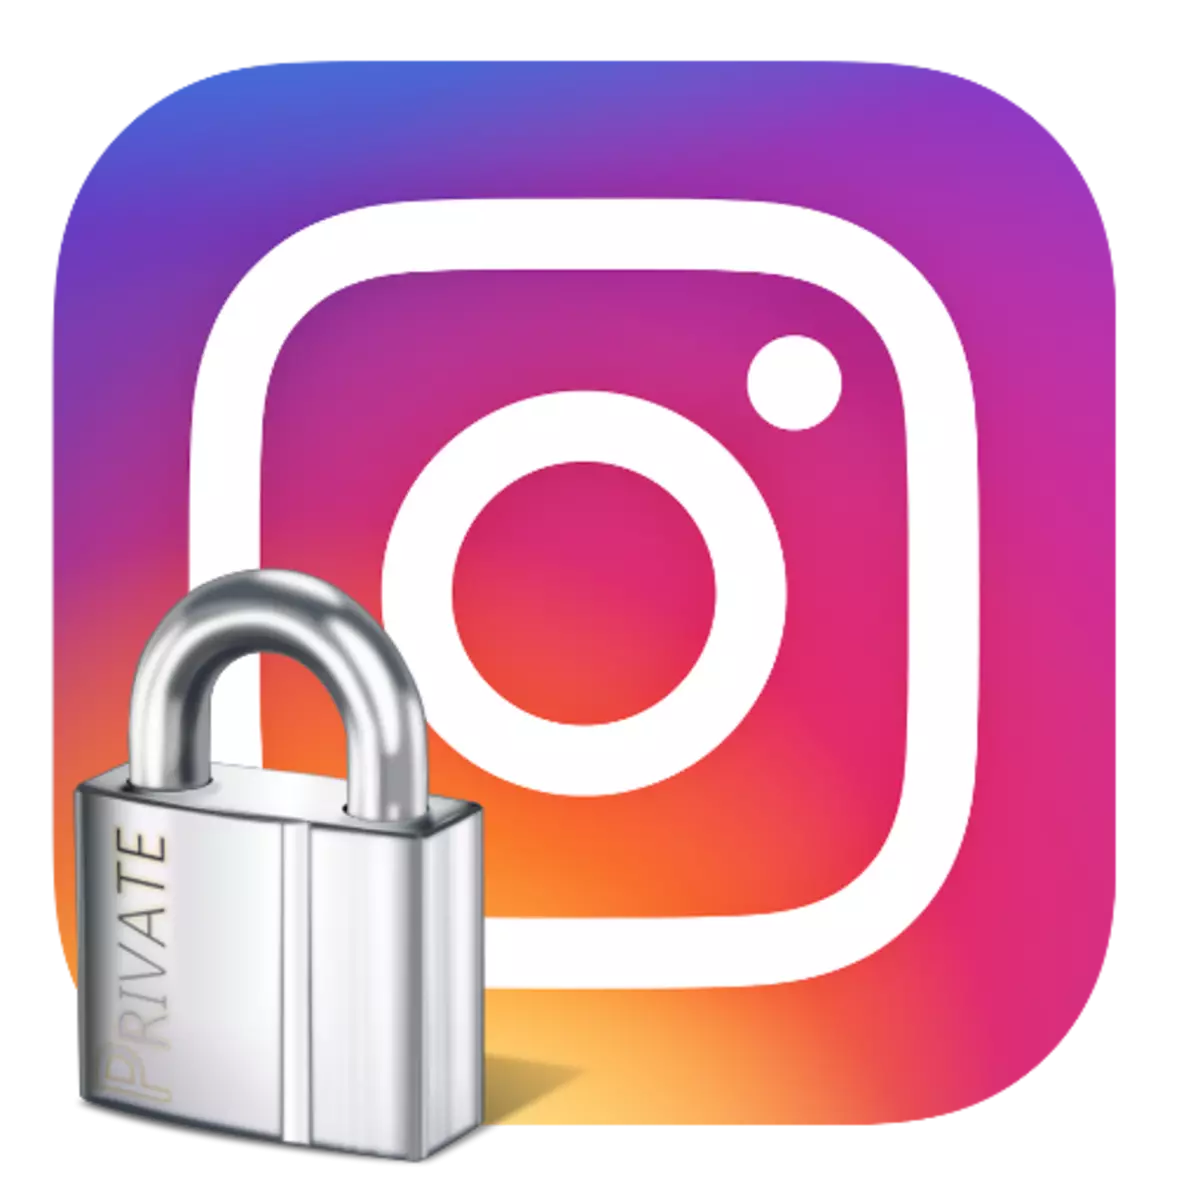 Instagram ውስጥ በተዘጋ መገለጫ ለማየት እንዴት